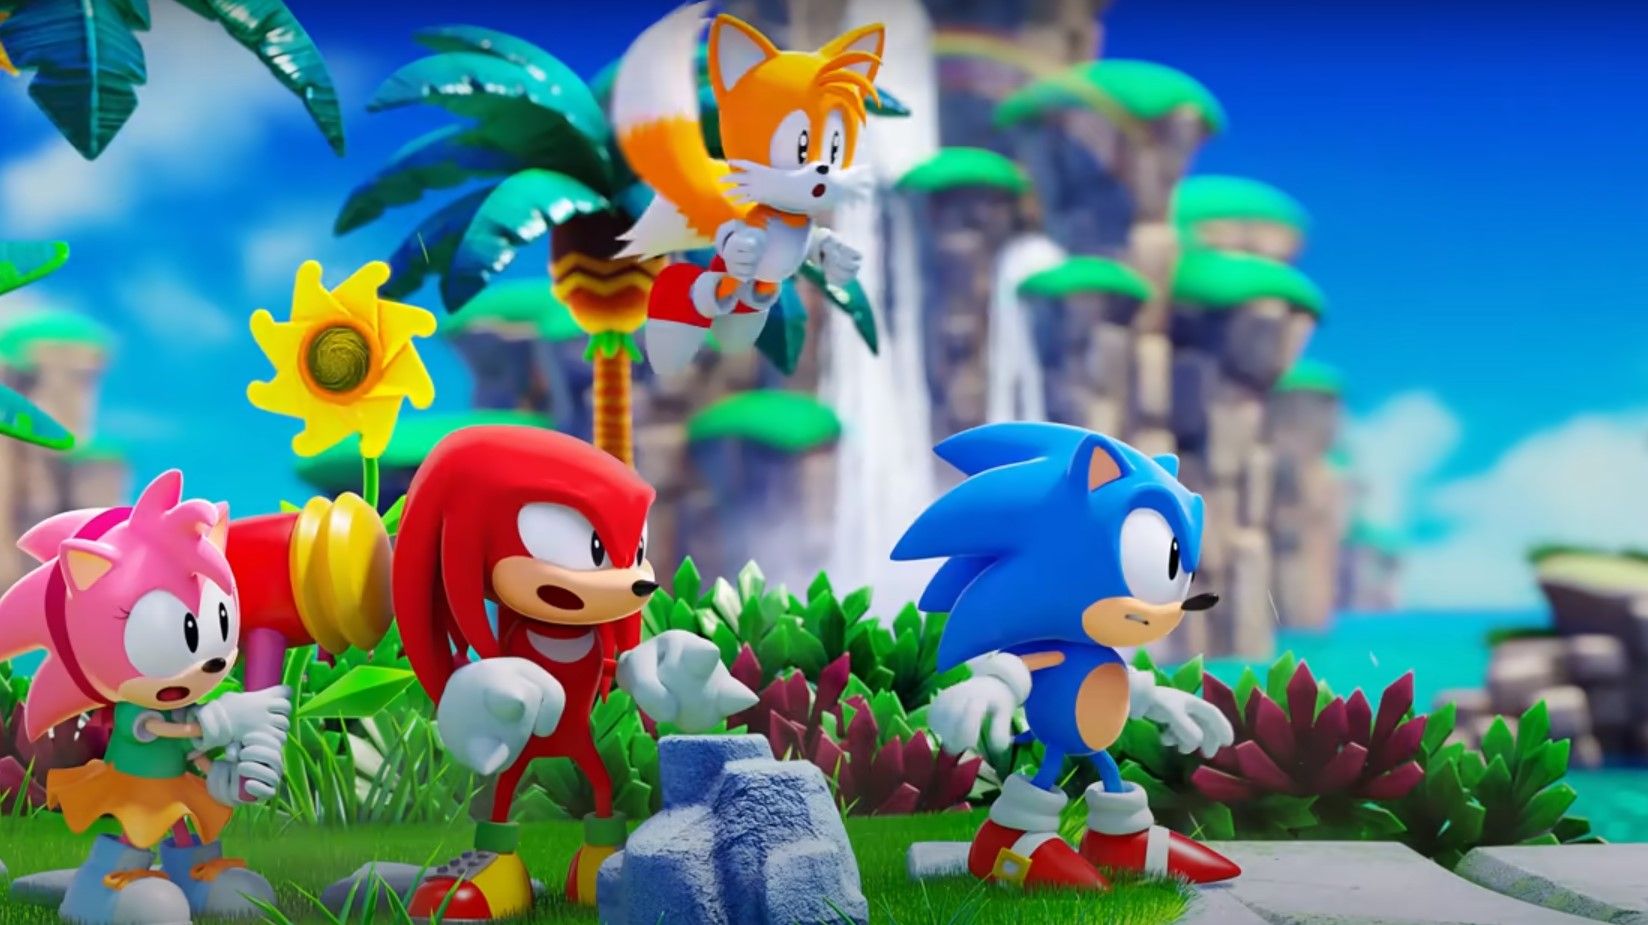 Sonic Superstars sales impacted by Mario, Sega suggests